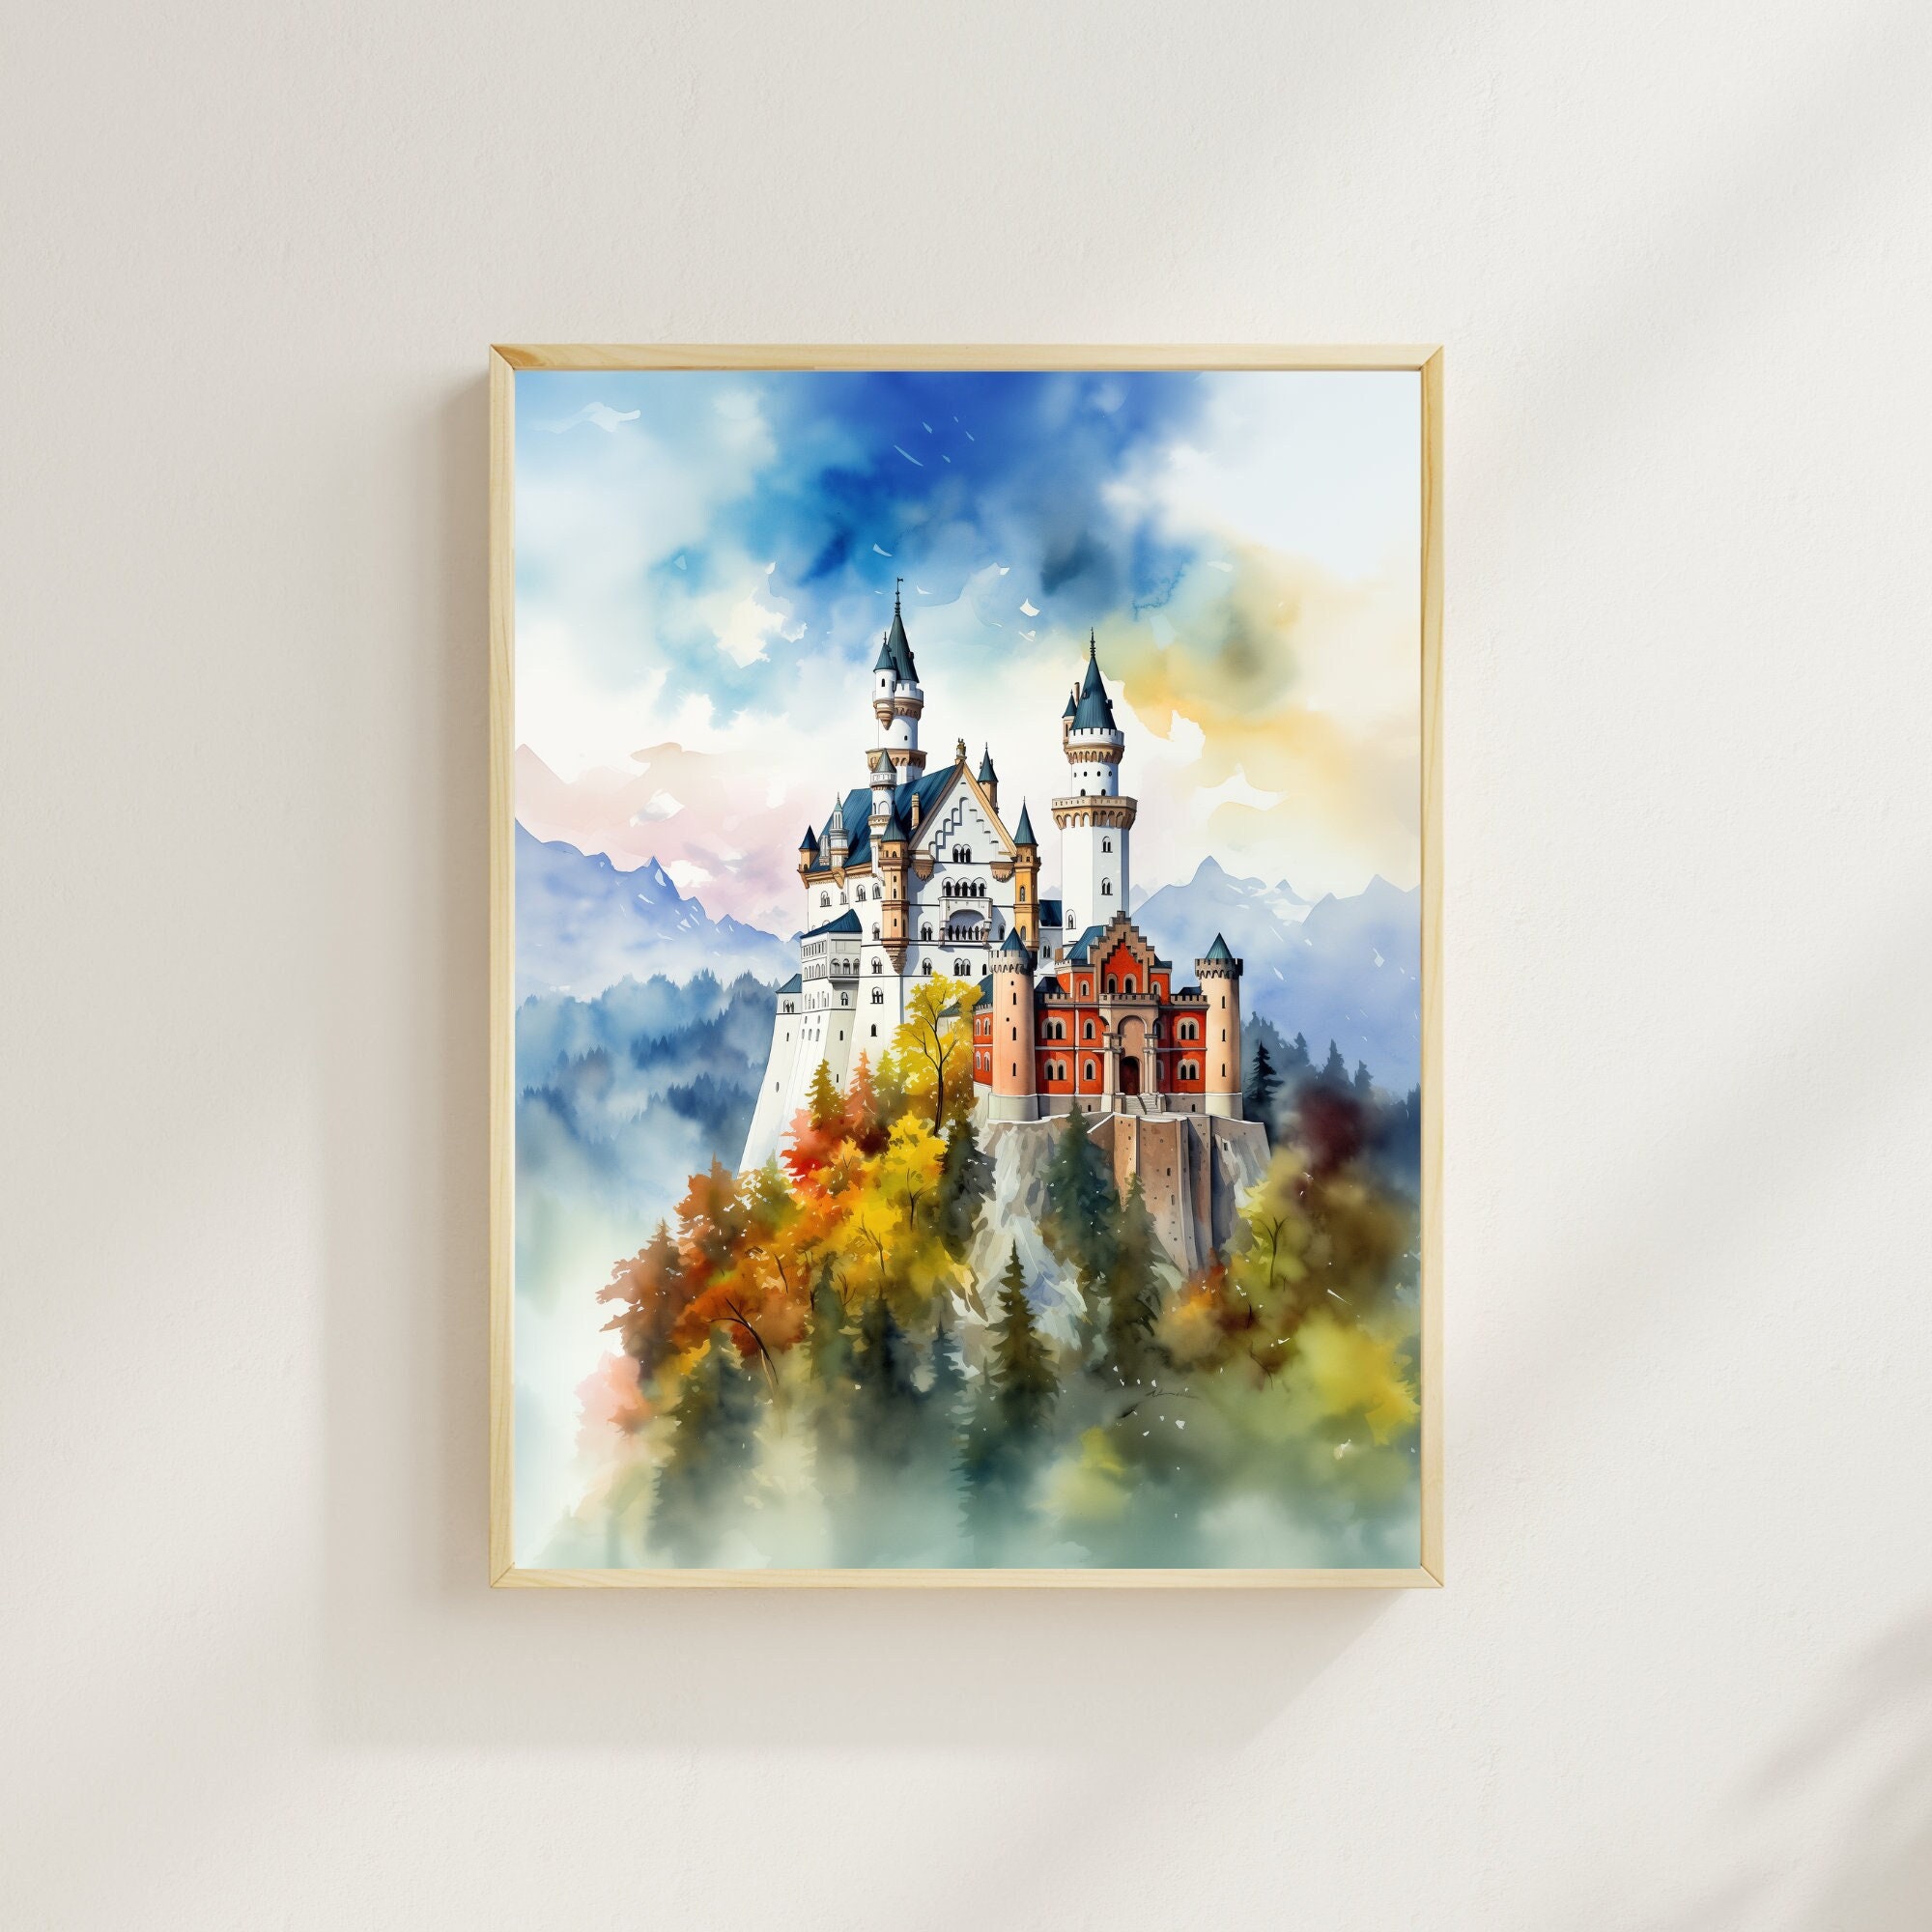 Fairy Tale Castle Art Print Neuschwanstein Oil Painting Germany European  Landscape Handmade 8x10 or 8.5x11 Artwork With 11x14 Mat 